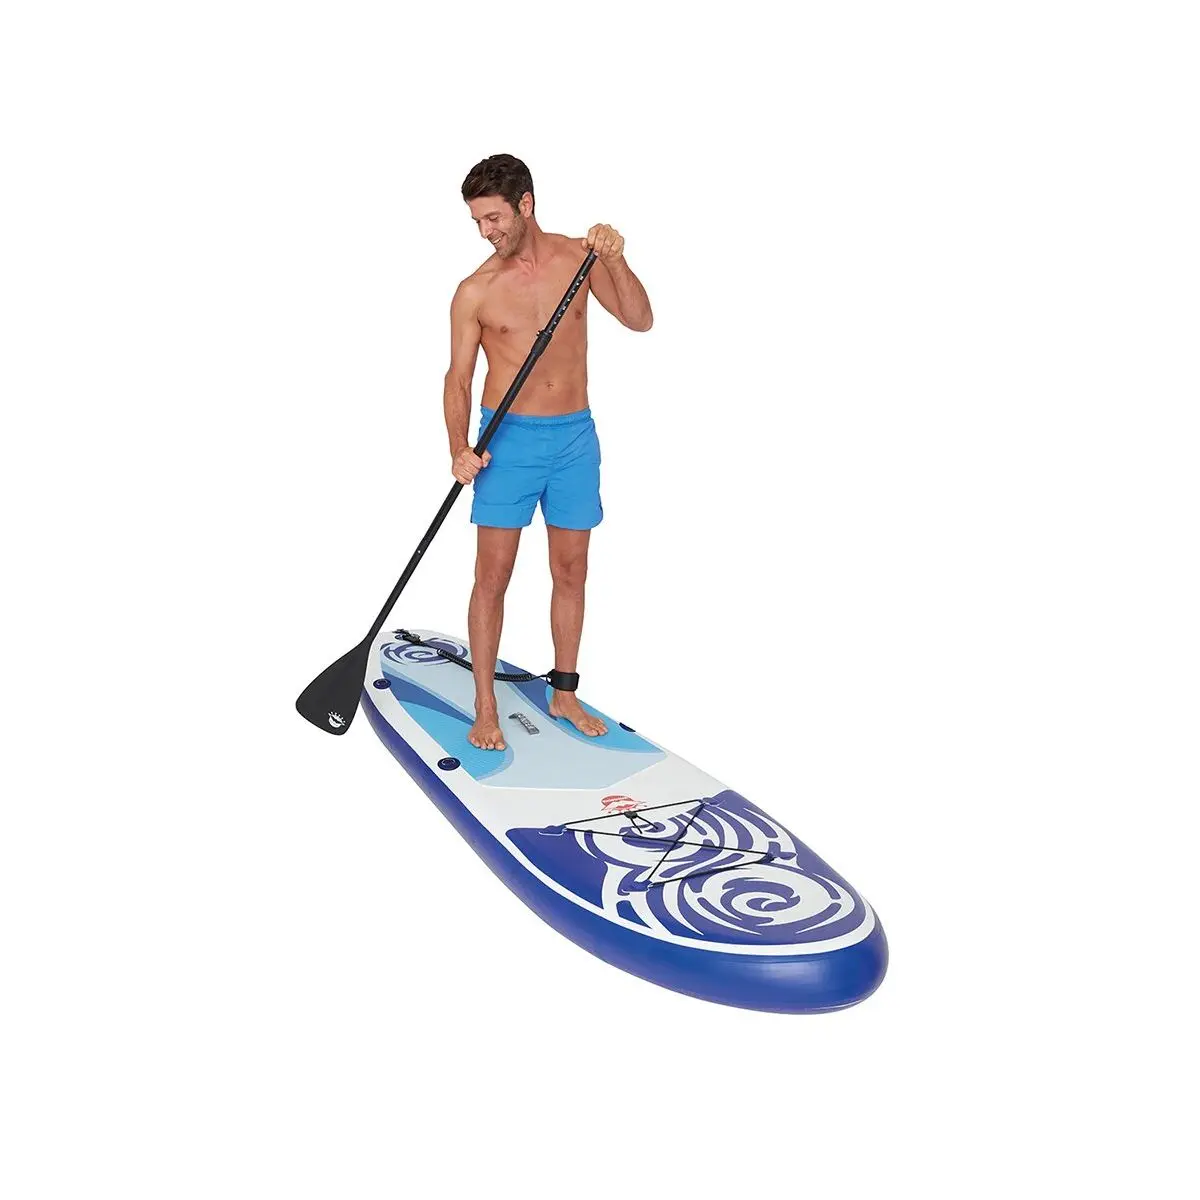 Stand Up Paddle Board - Szett, 305 x 81 cm